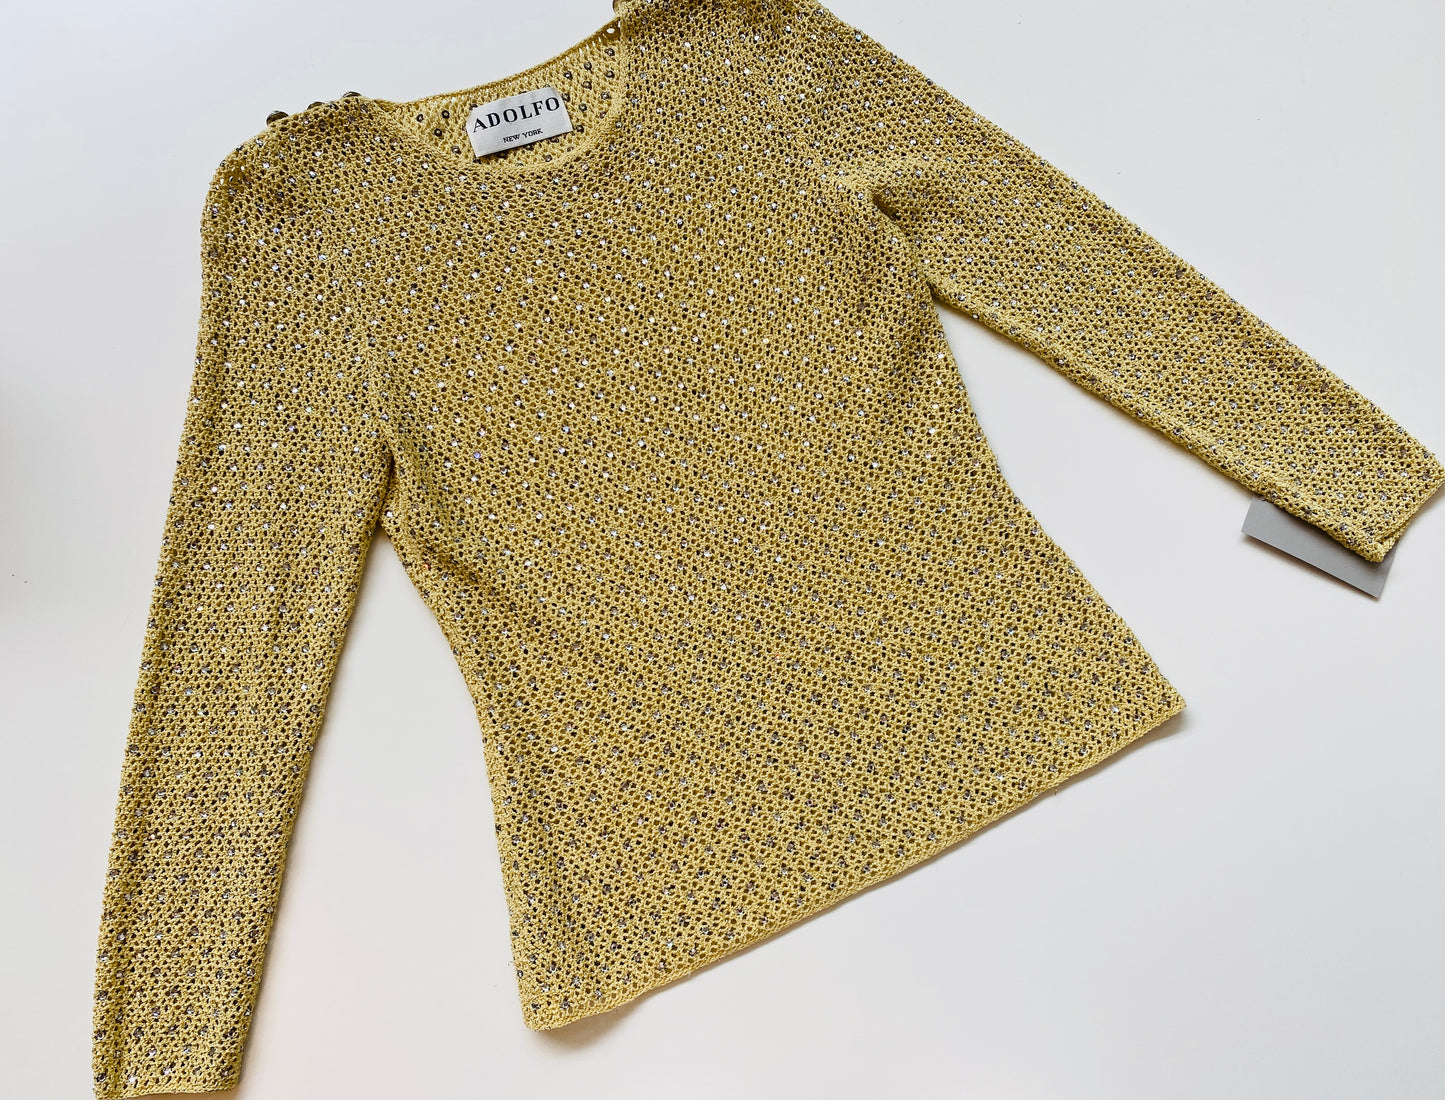 Vintage 1970s Adolfo Yellow Sparkly Rhinestone Crochet Top, Small- Med